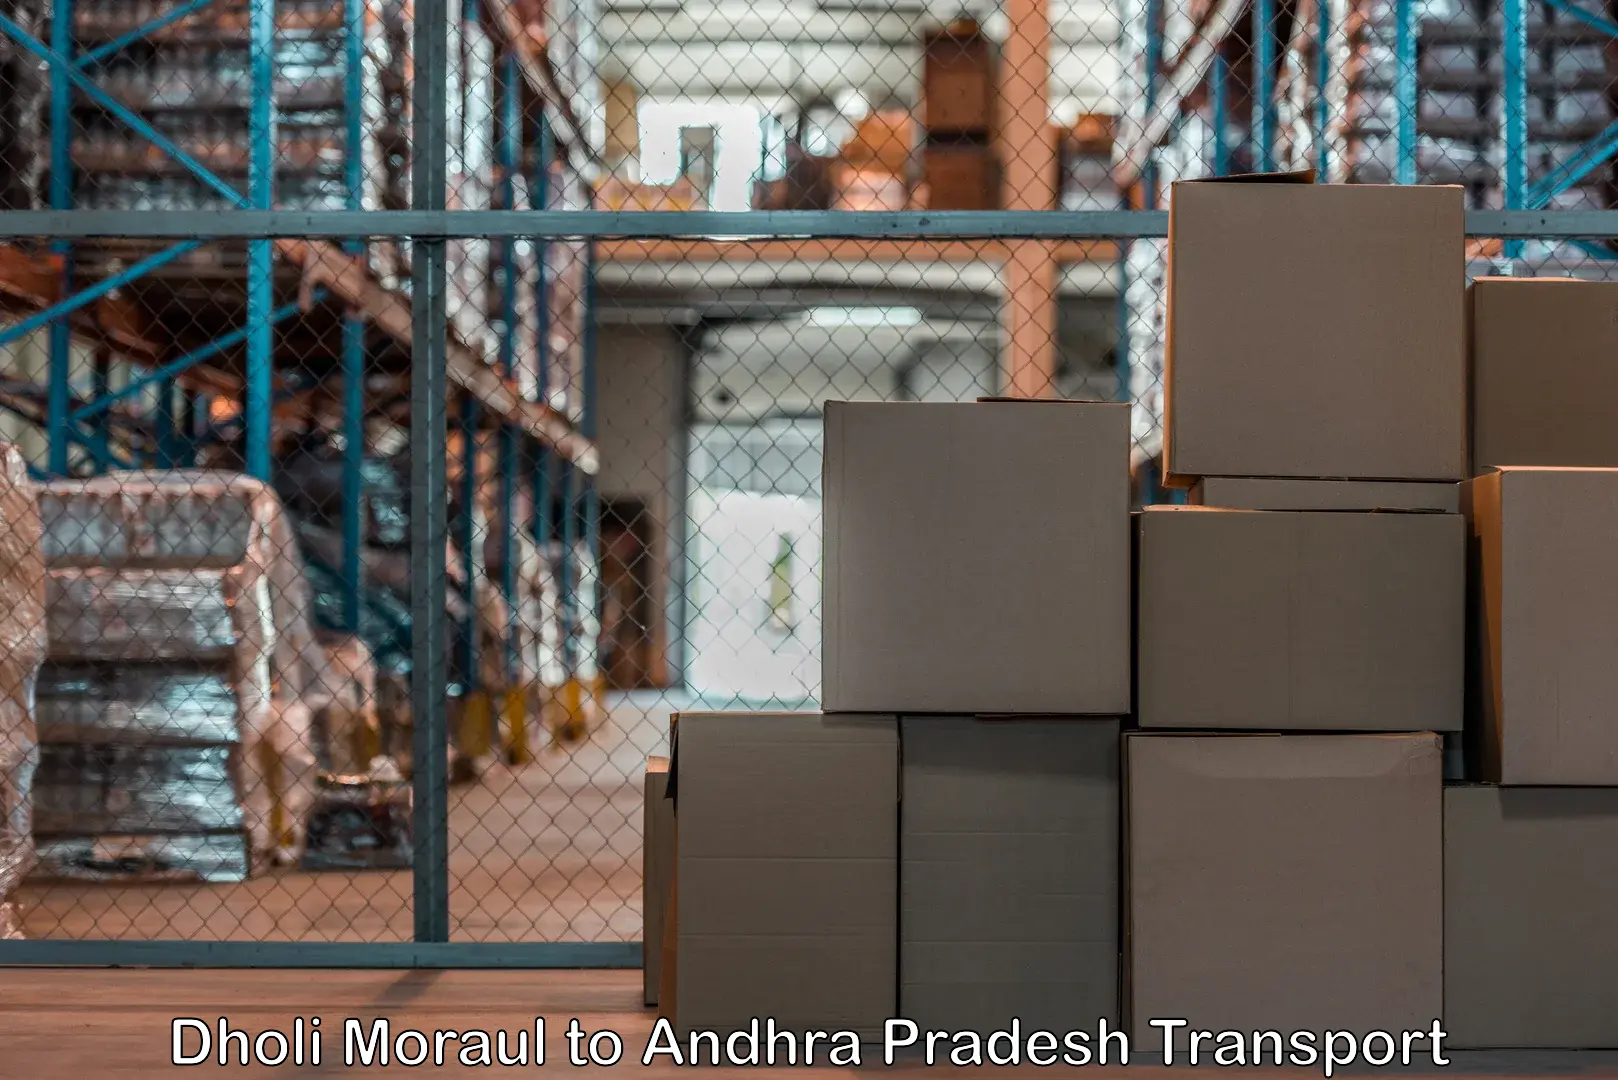 Truck transport companies in India Dholi Moraul to Vissannapeta